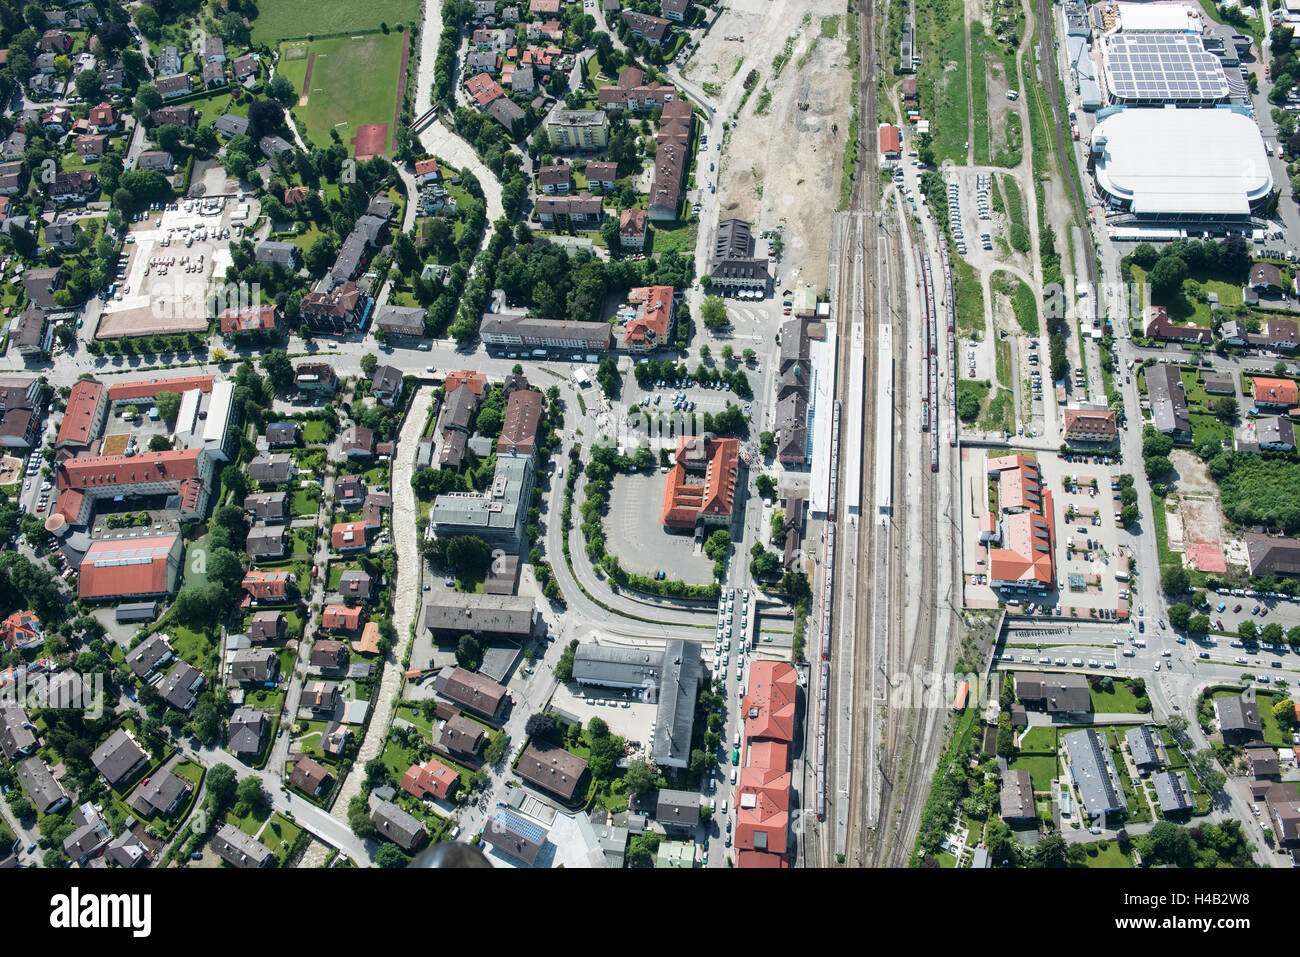 Vertice G7 2015, dimostrazione di massa a Garmisch-Partenkirchen, stazione ferroviaria, la Coalizione per Fermare l'azione-G7-Elmau, antenna shot, altipiani, Baviera, Germania Foto Stock